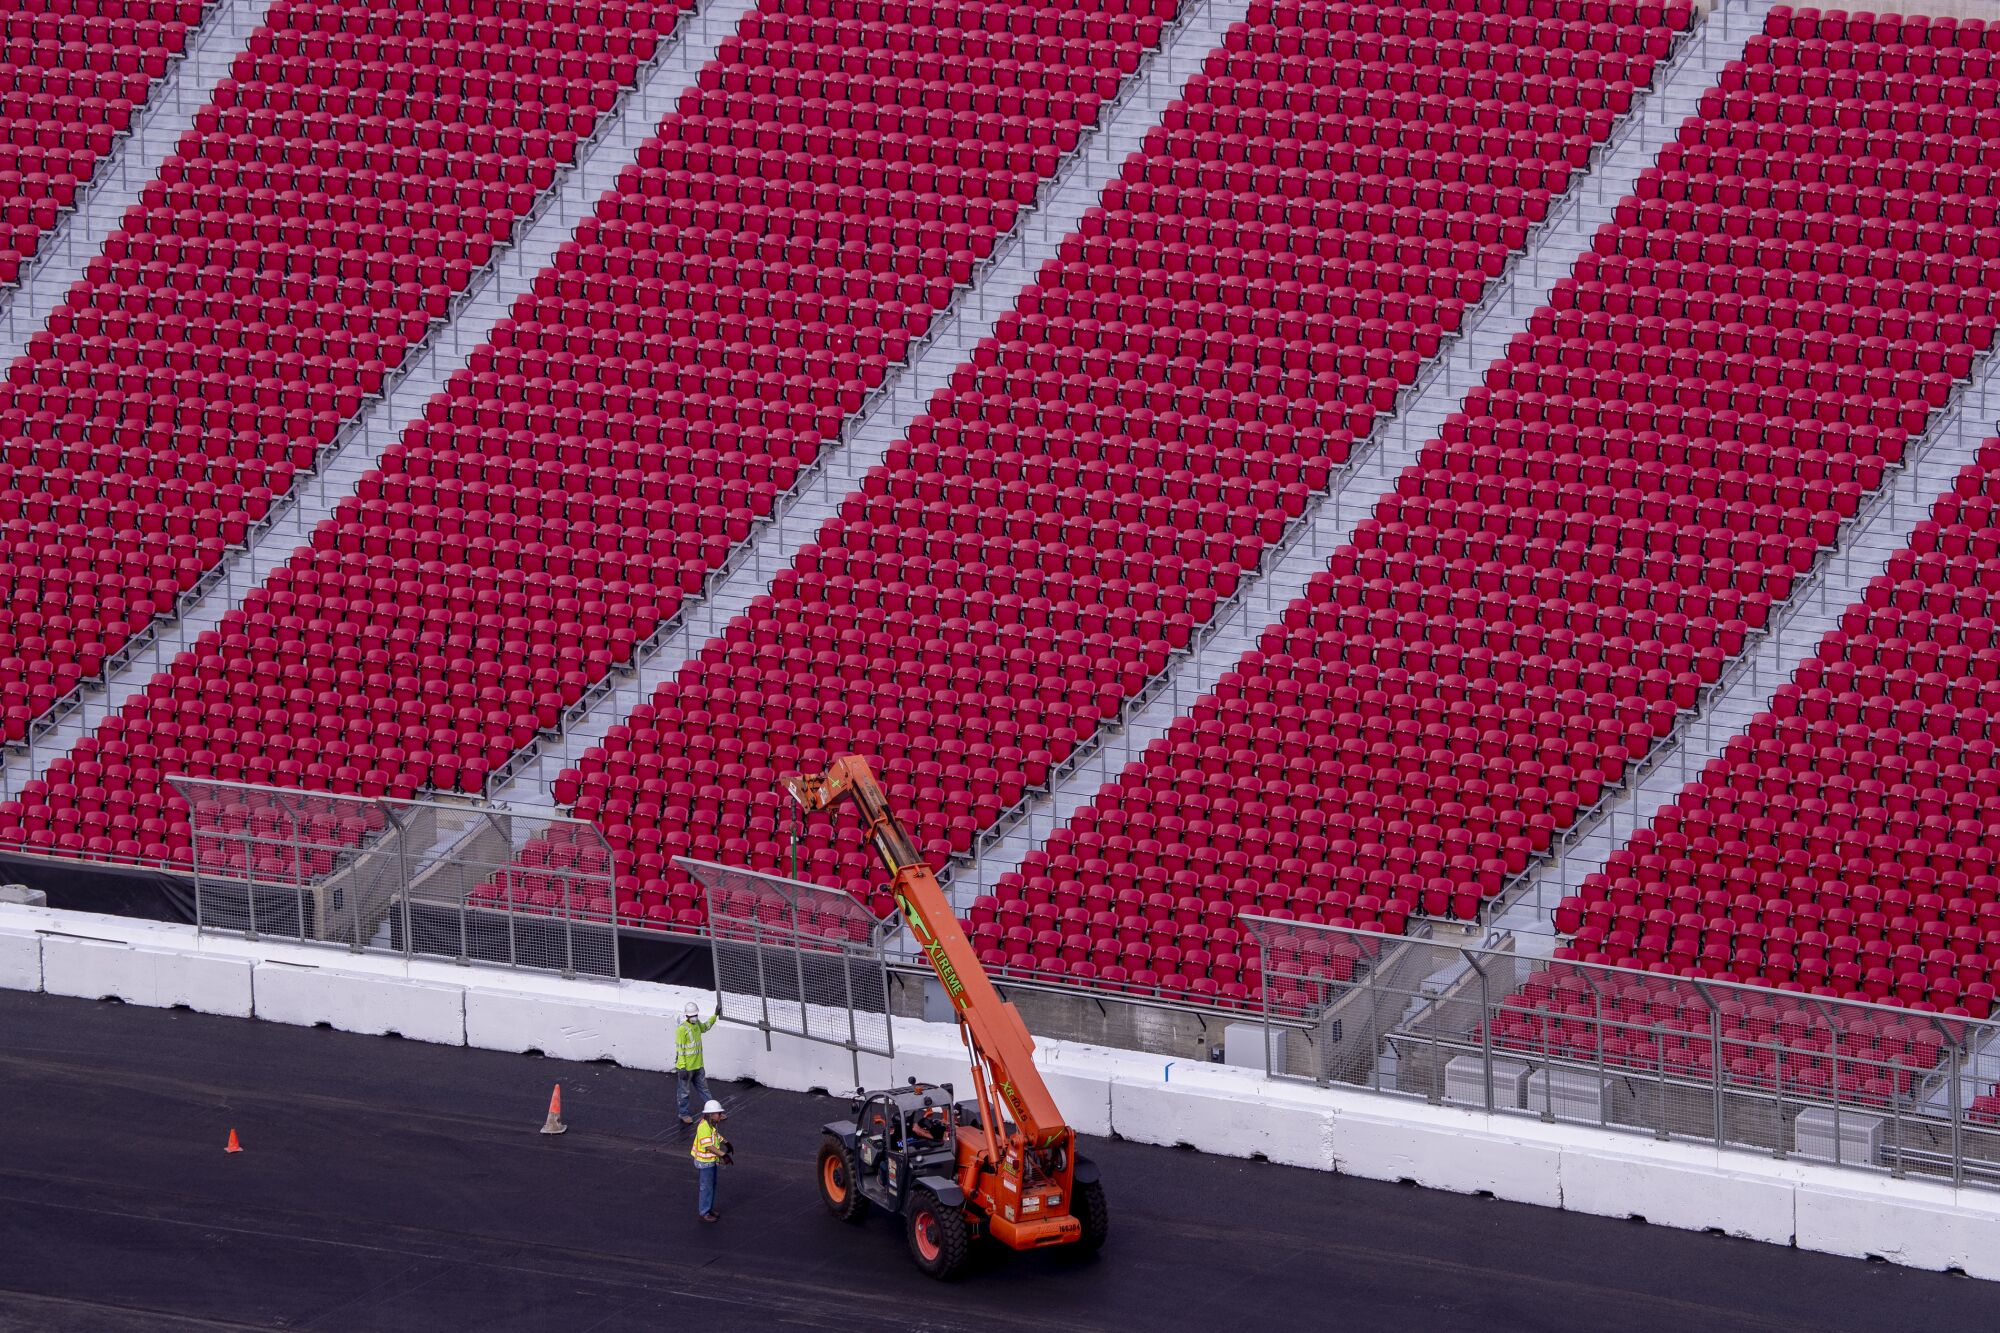 Construction crews transform the Coliseum from a football stadium to a quarter-mile short track NASCAR exhibition race track.